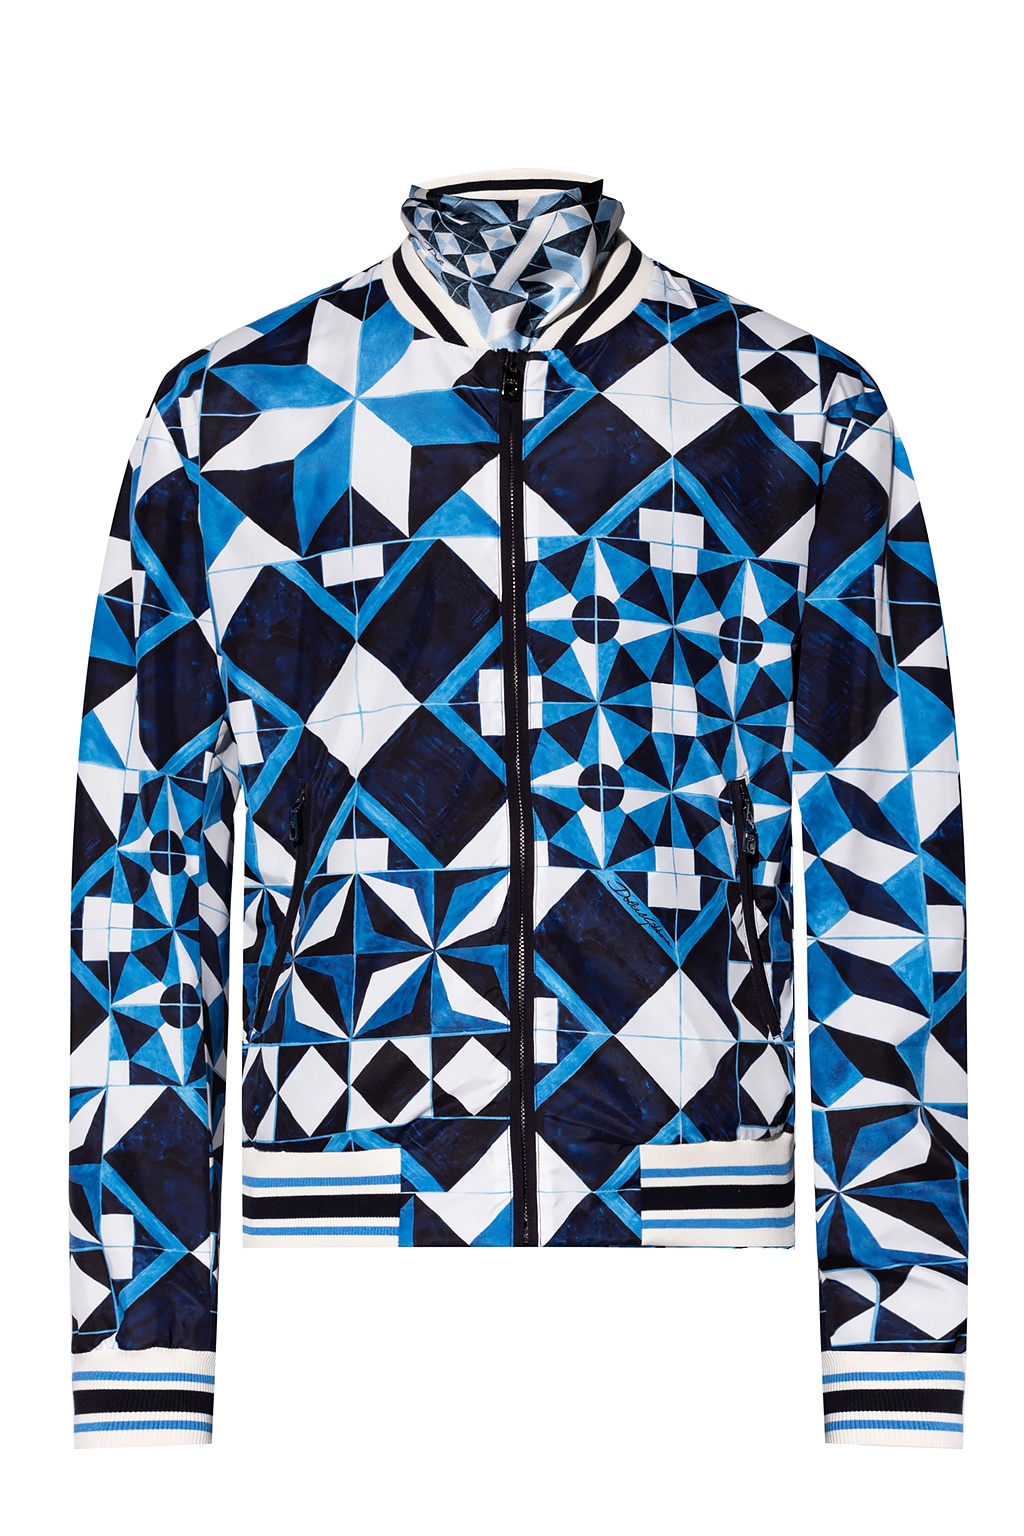 Louis Vuitton Blue Bomber Jacket